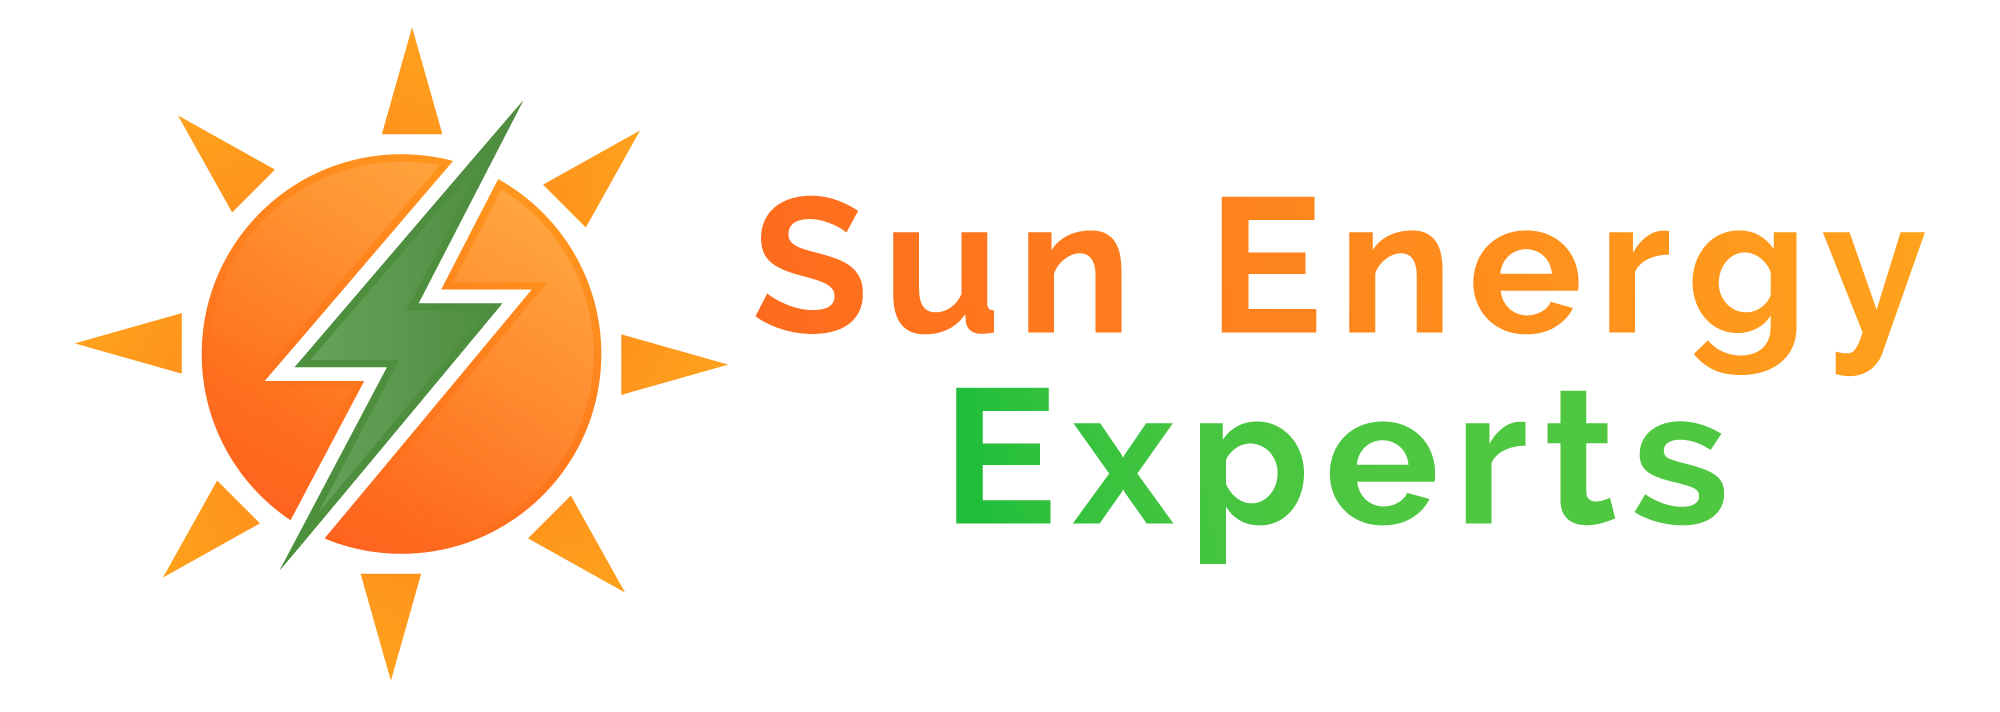 Sun Energy Experts